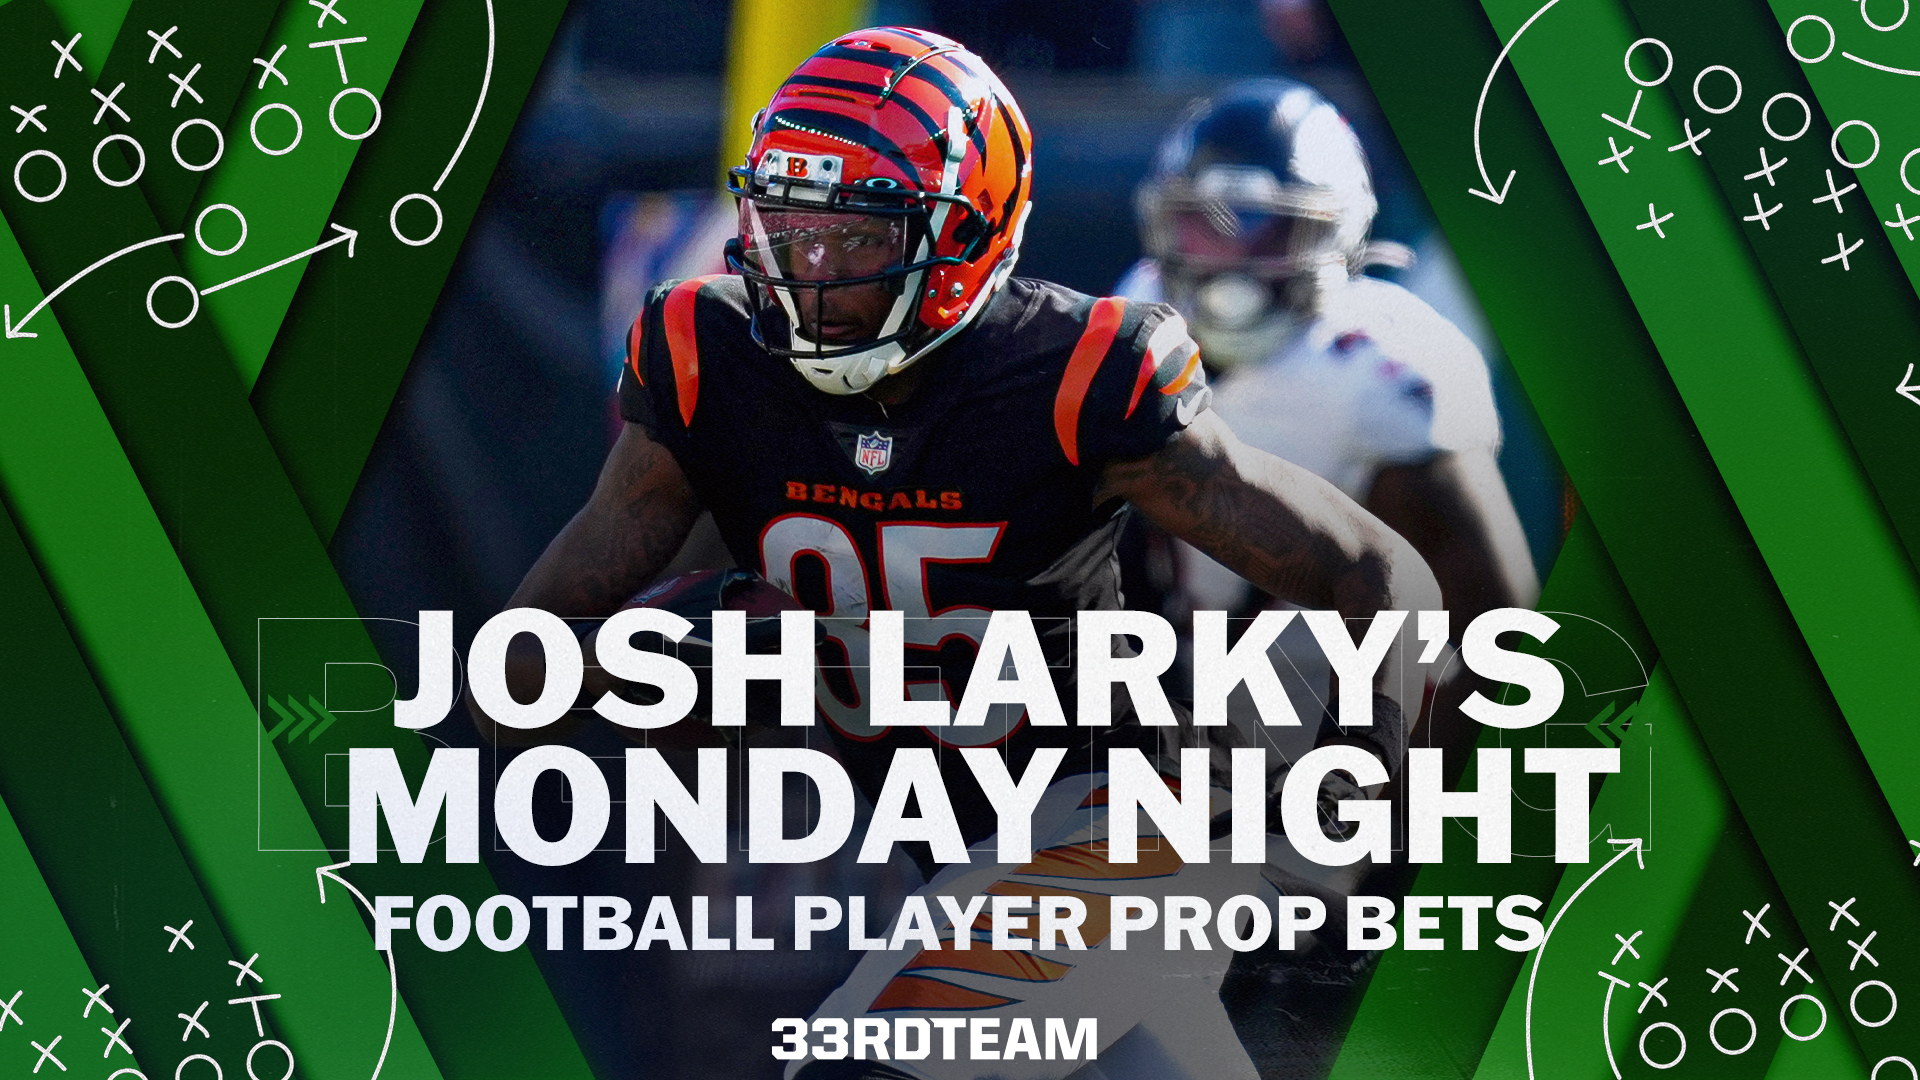 Josh Larky’s Monday Night Football Player Props